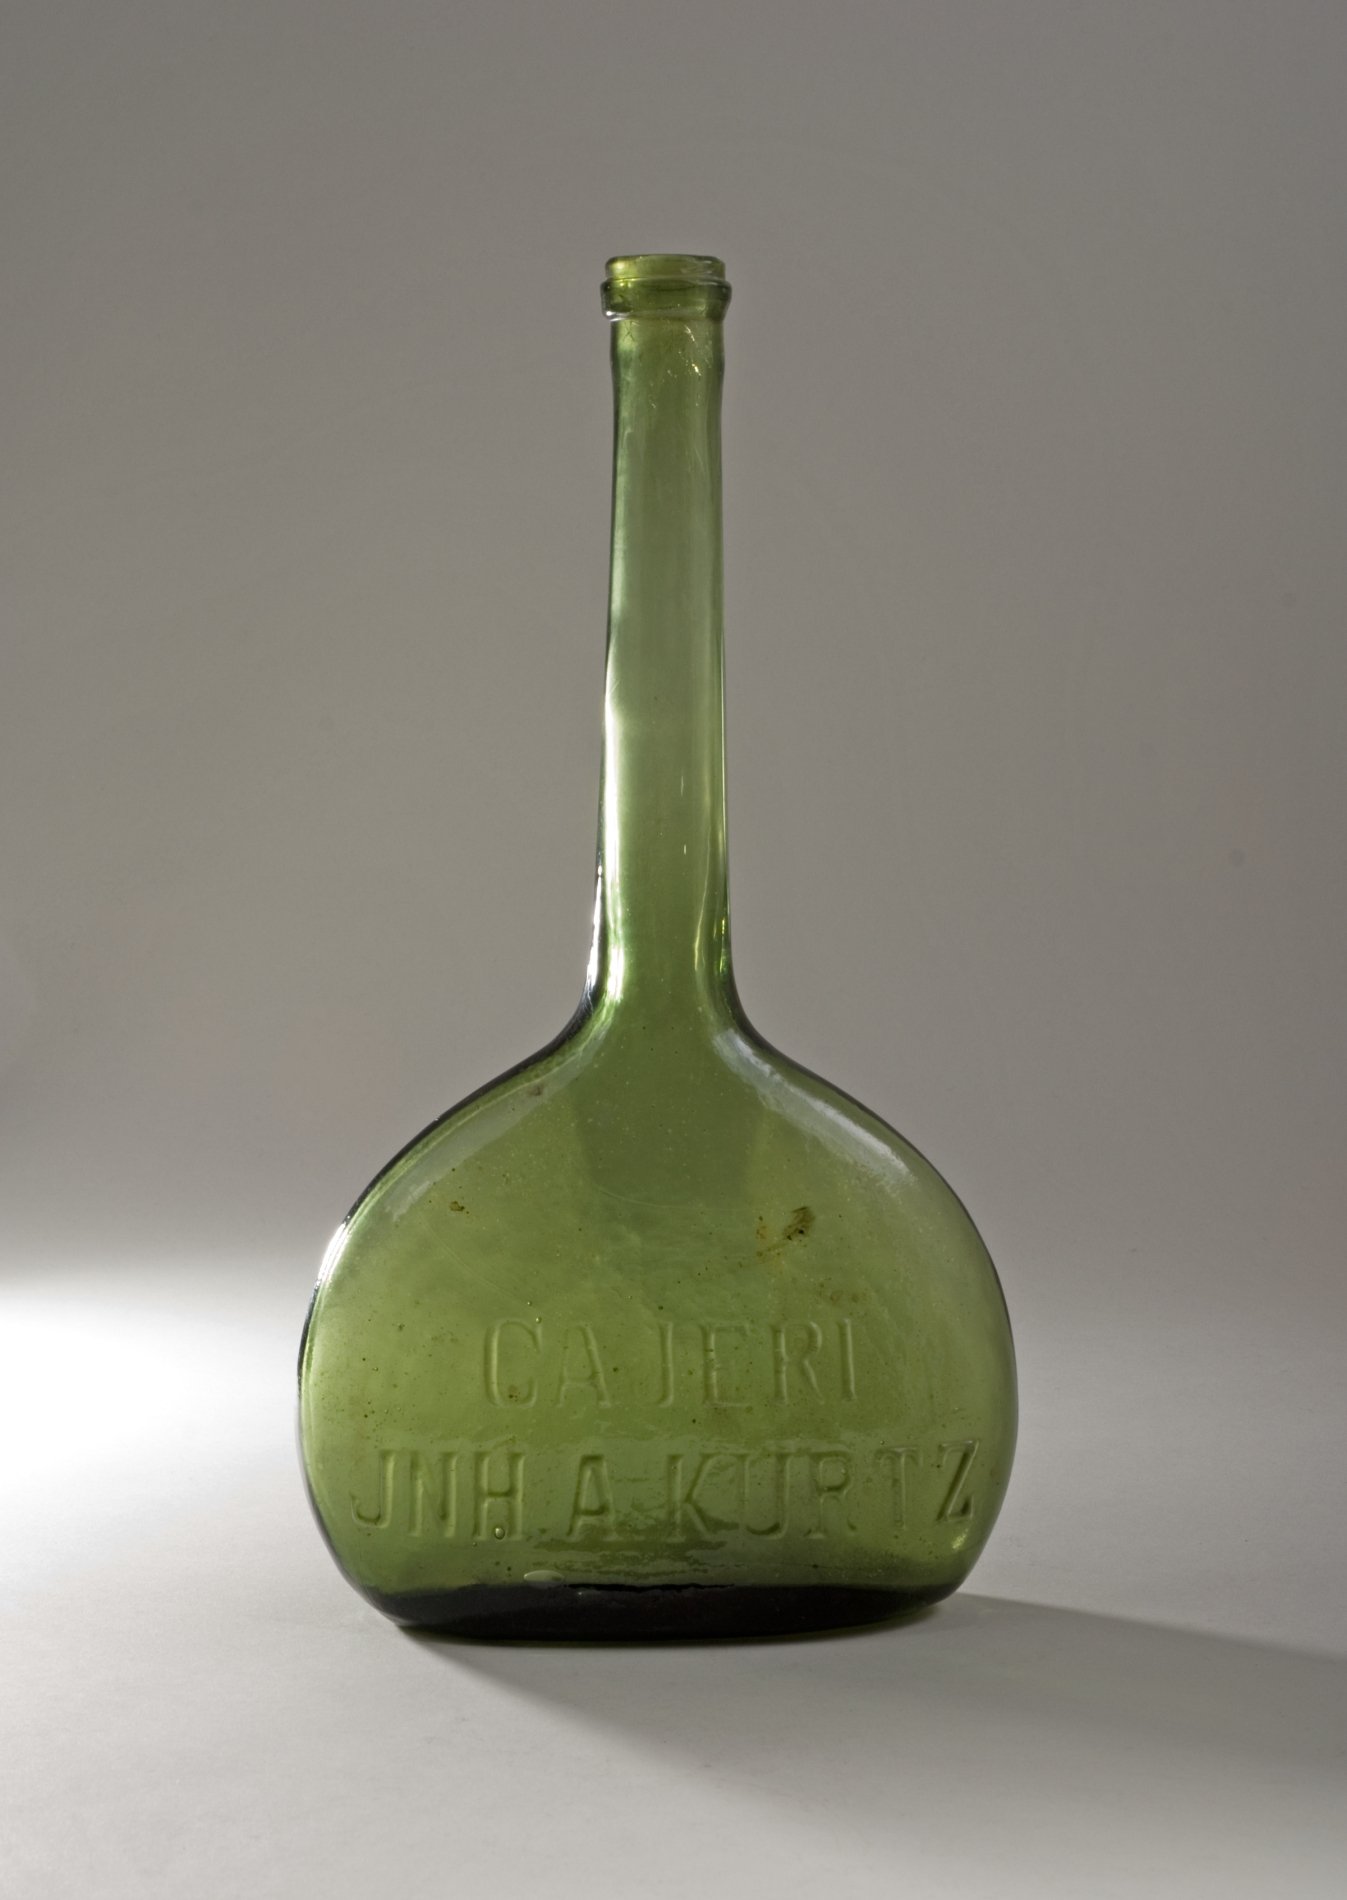 Bierflasche "Gose" - "CAJERI JNH A KURTZ" (Stiftung Domäne Dahlem - Landgut und Museum, Weiternutzung nur mit Genehmigung des Museums CC BY-NC-SA)